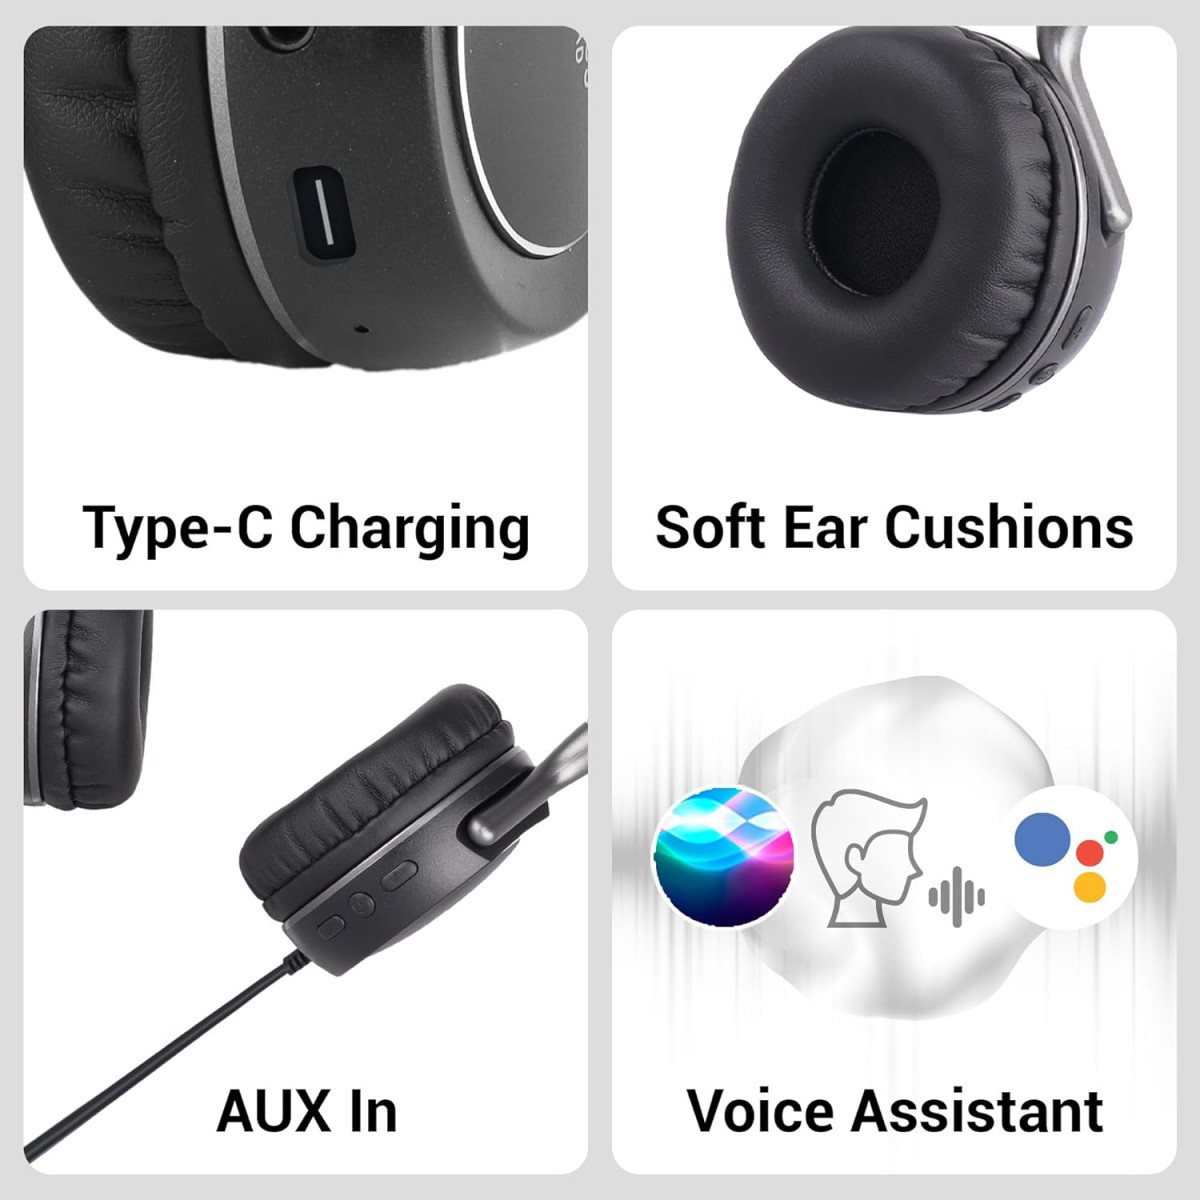 ZEBRONICS DUKE 2 Wireless Headphone Supports Bluetooth Dual Pairing Black